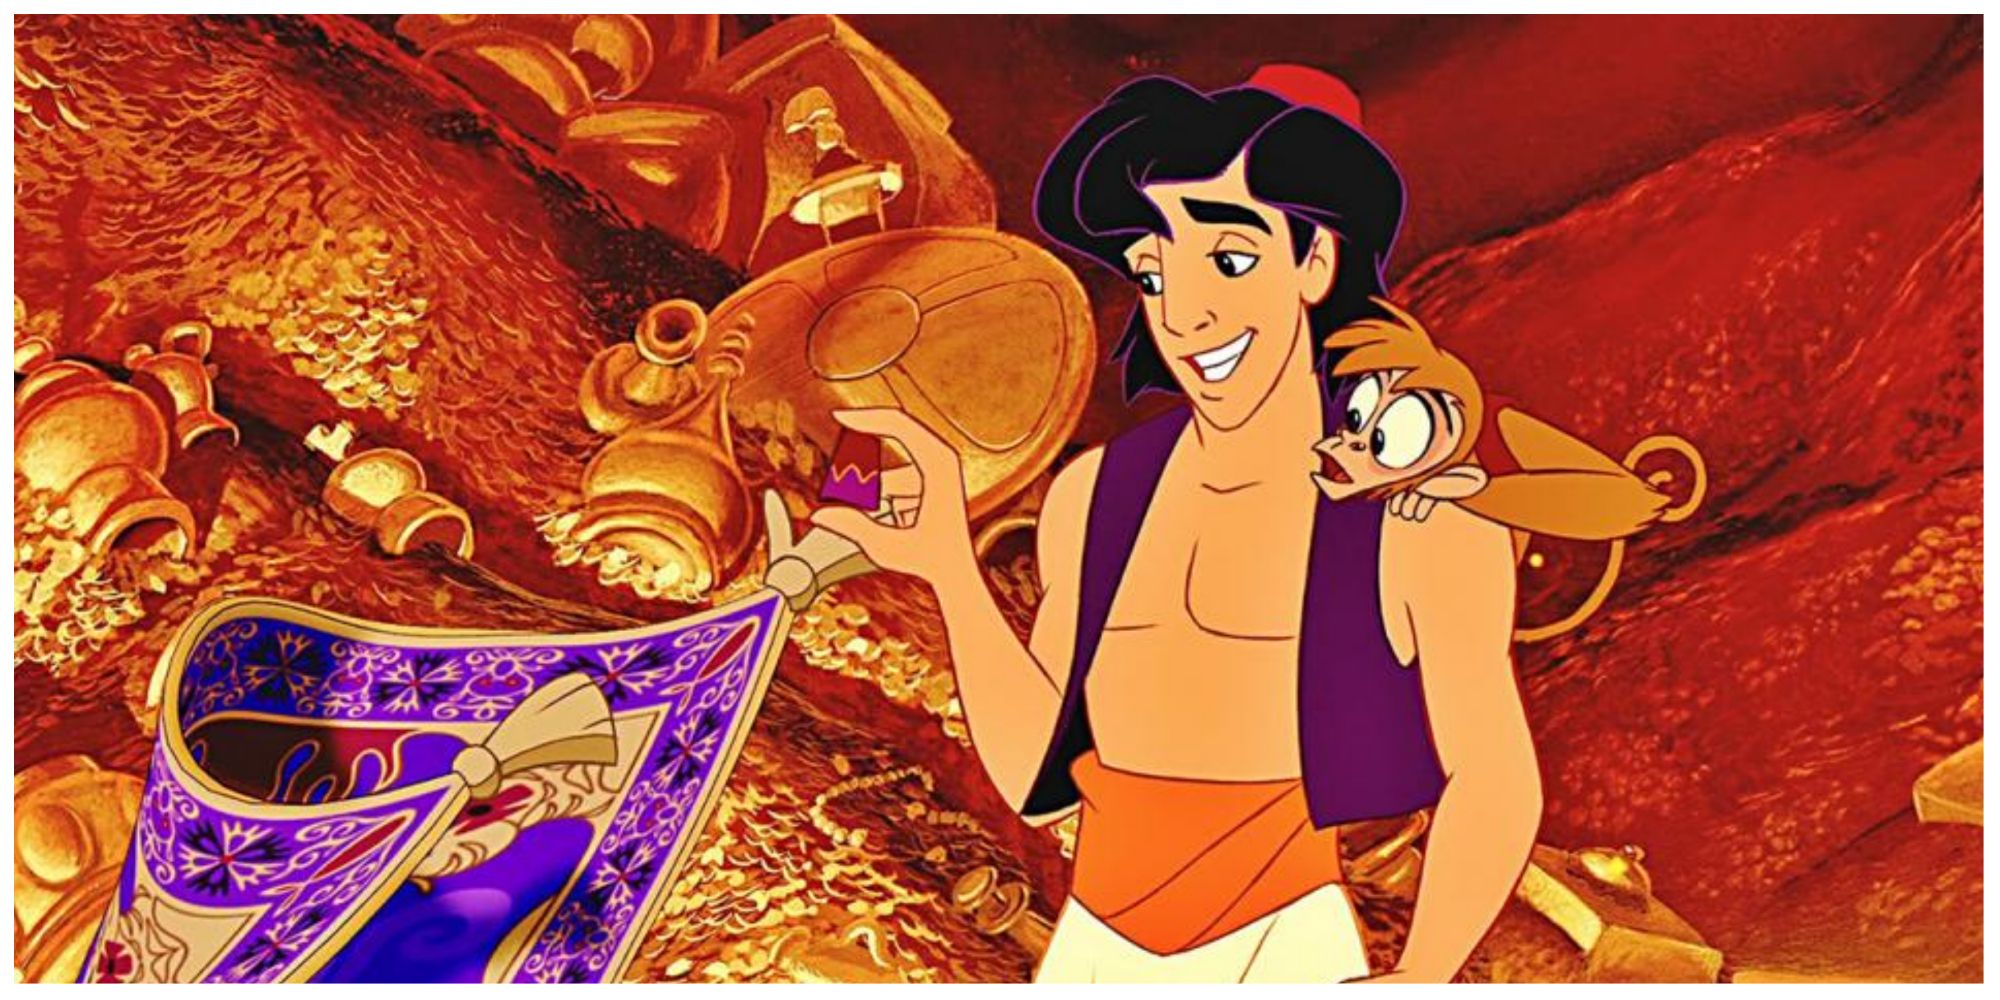 Aladdin in the cave of wonders in Aladdin (1992).